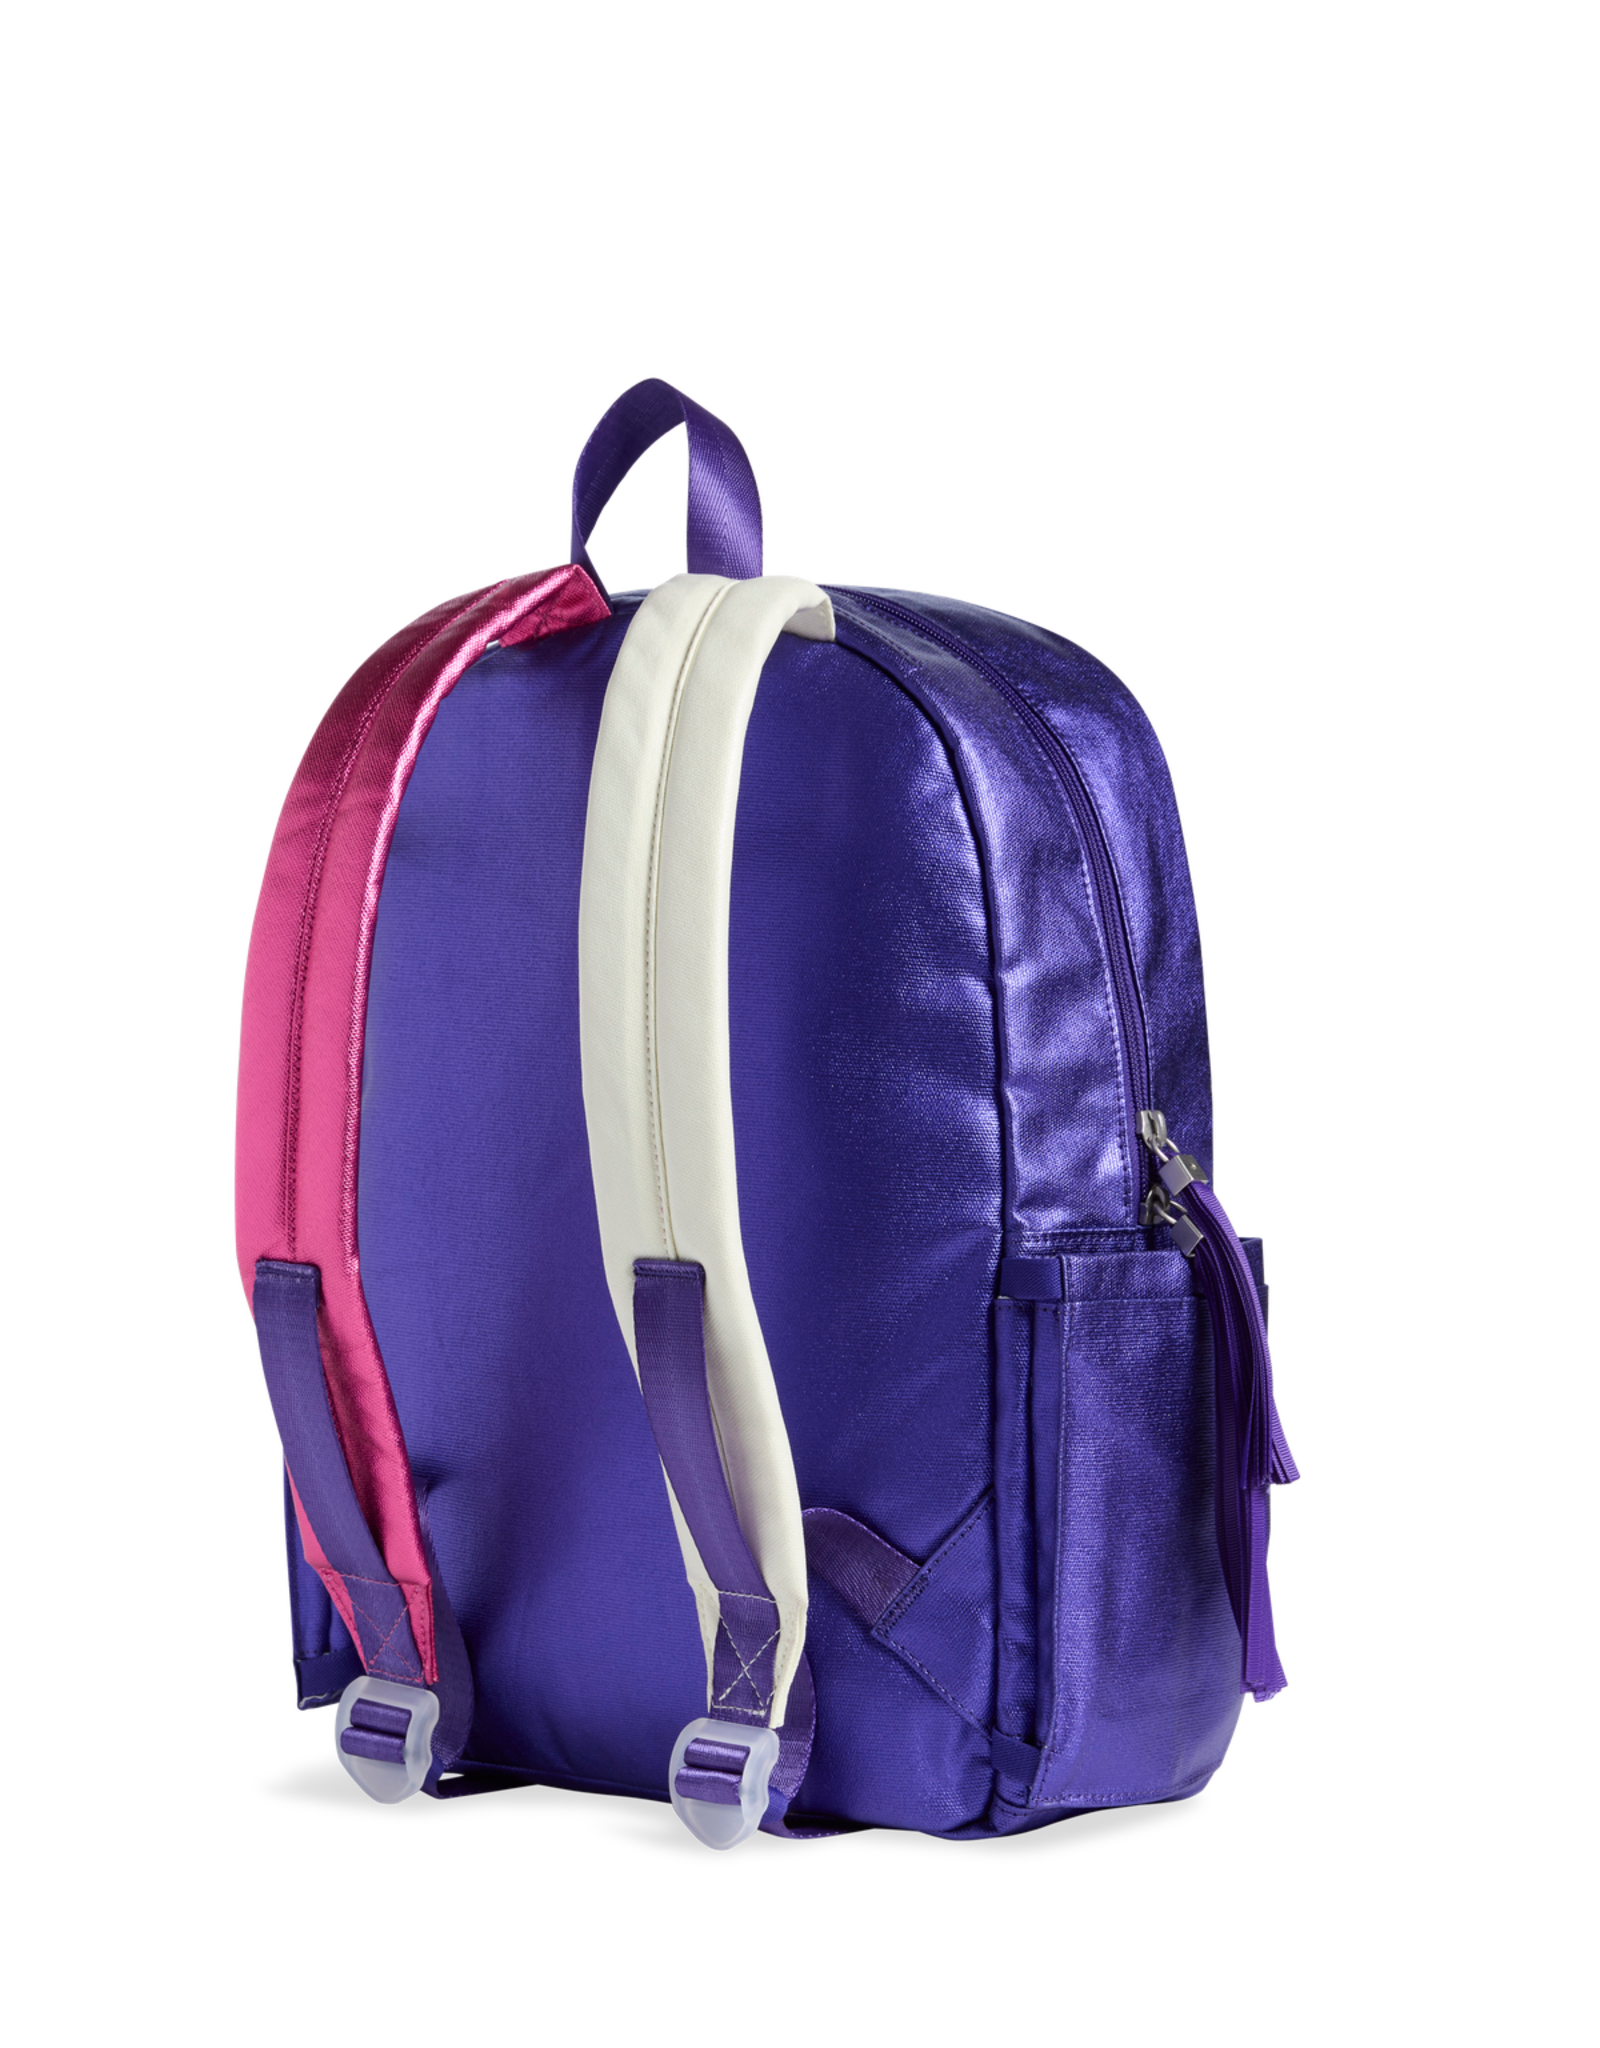 State Bags kane kids- purple multi